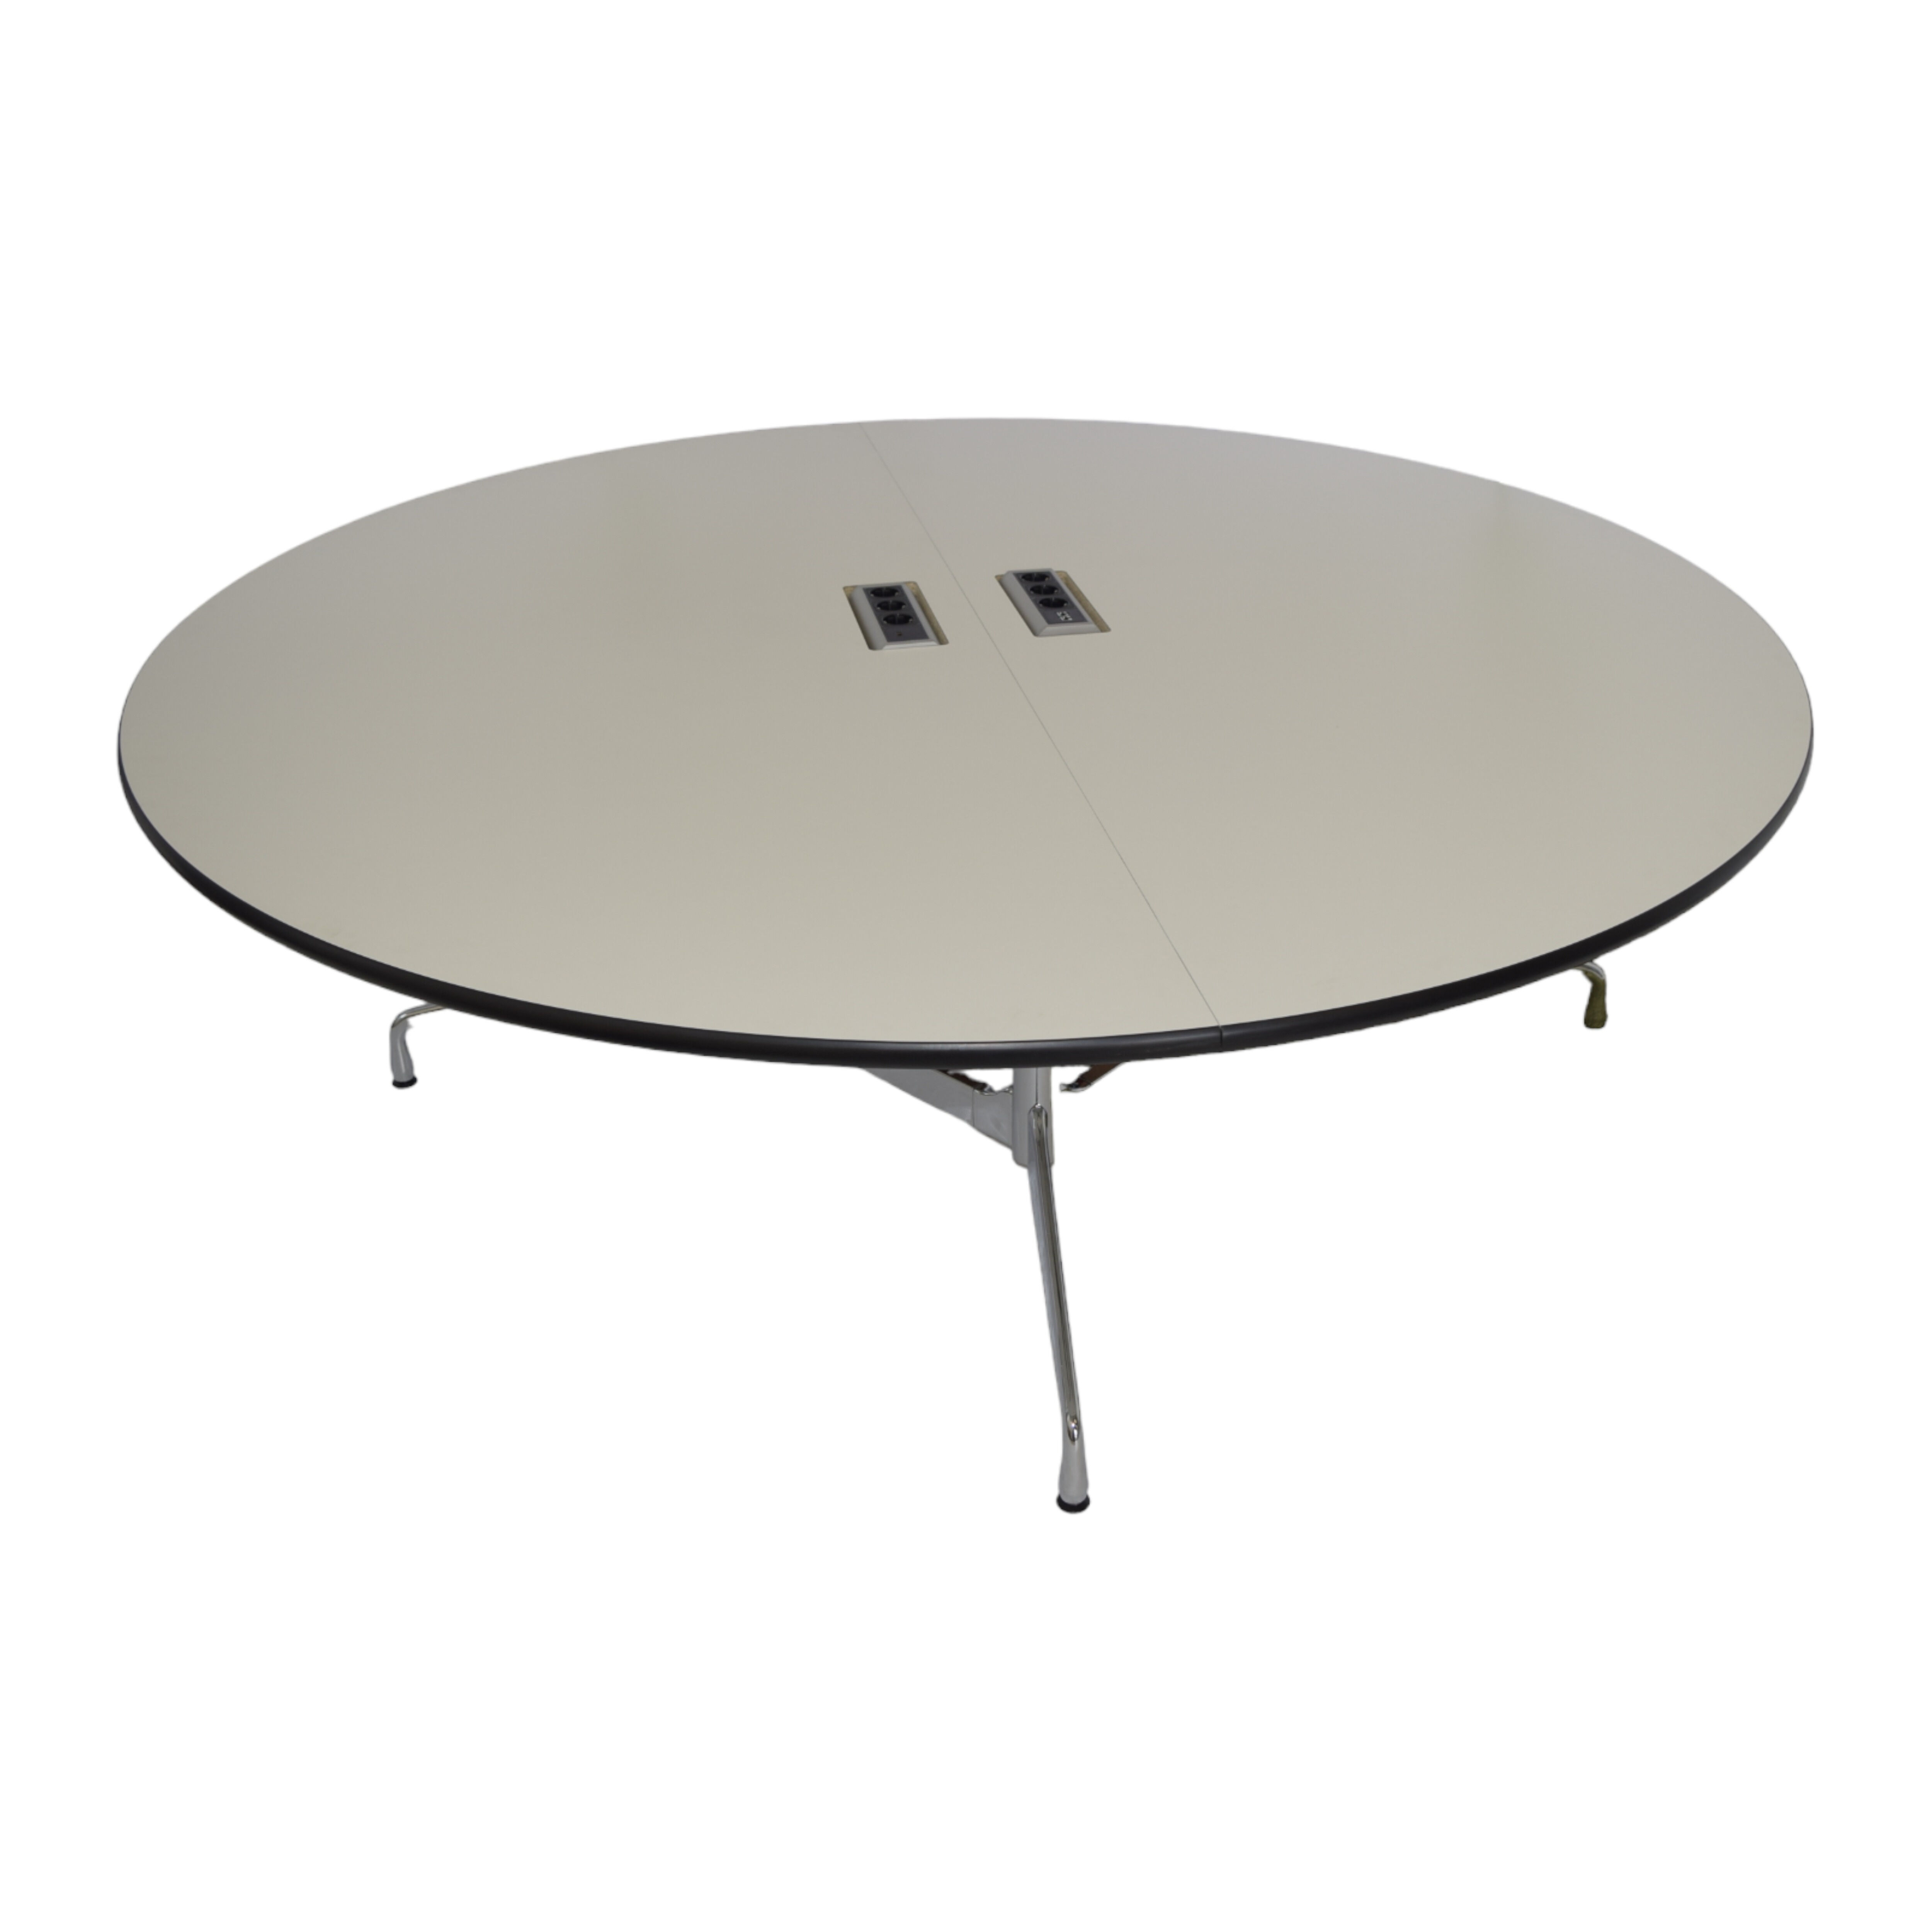 vitra-tisch-eames-segmented-table-hartbelag-weiss-kunststoffkante-schwarz-gestell-chrom-mf-0003554-3